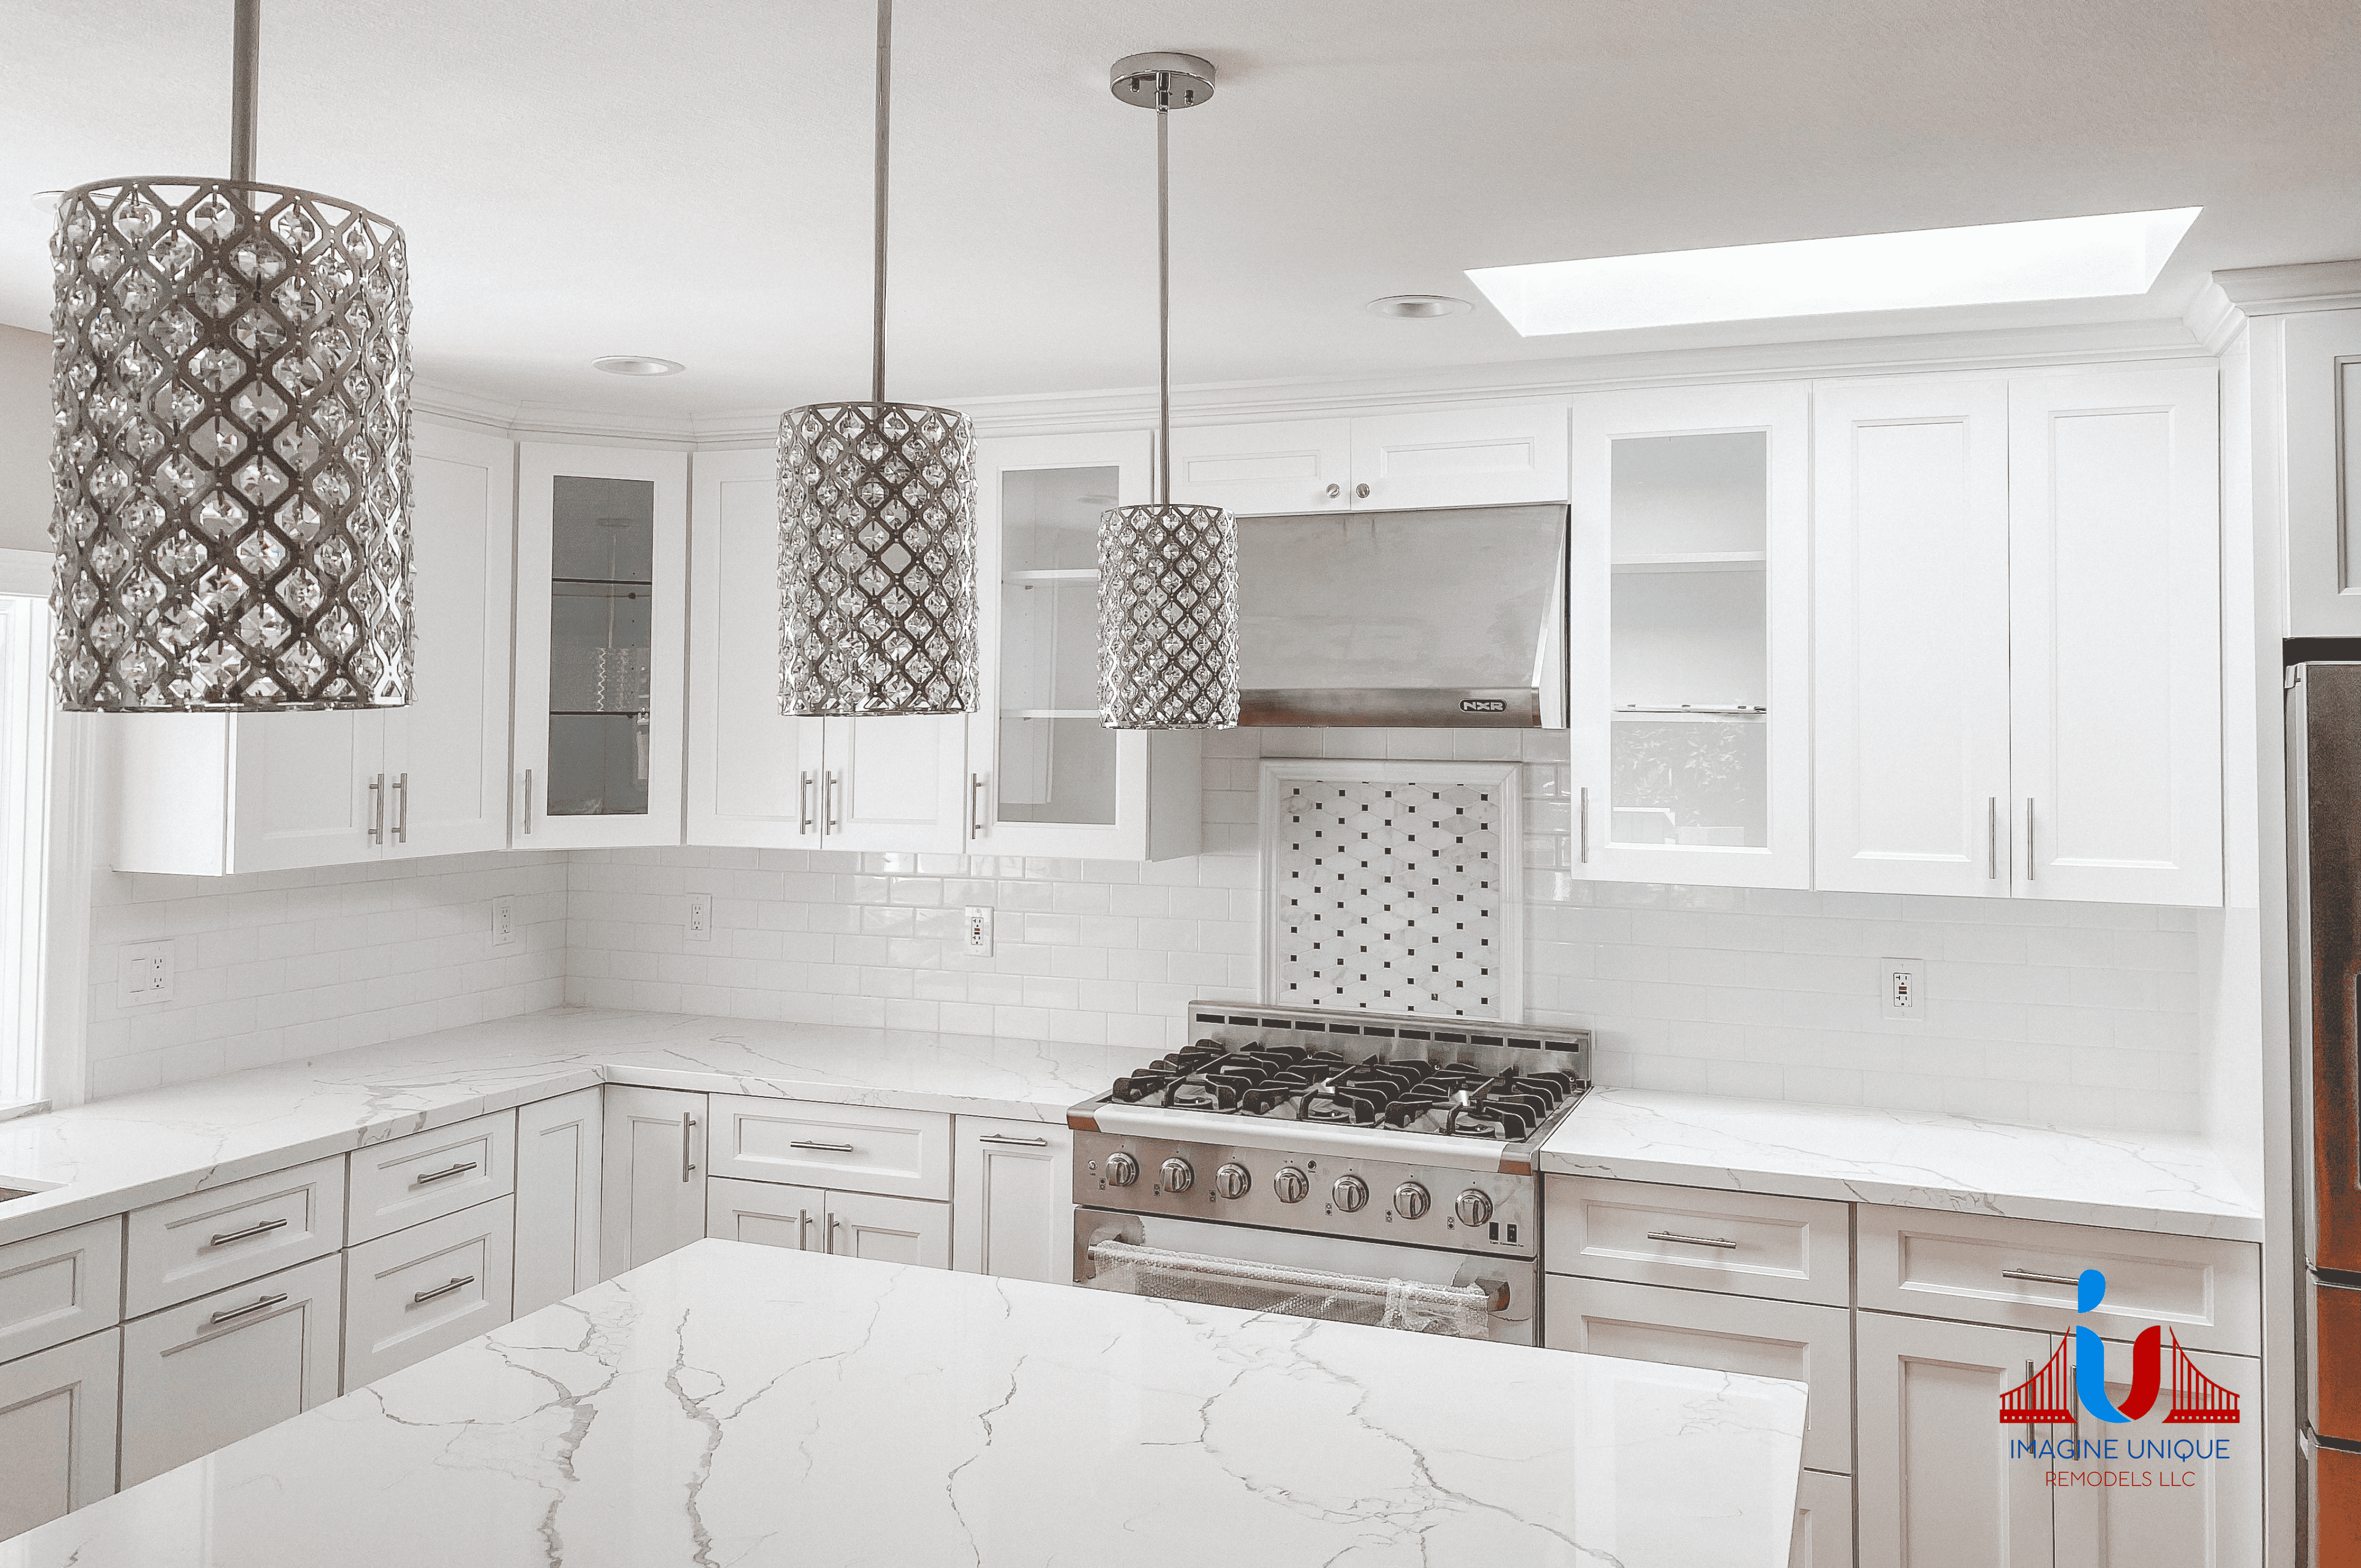 kitchen cabinet design - Imagine Unique Remodels